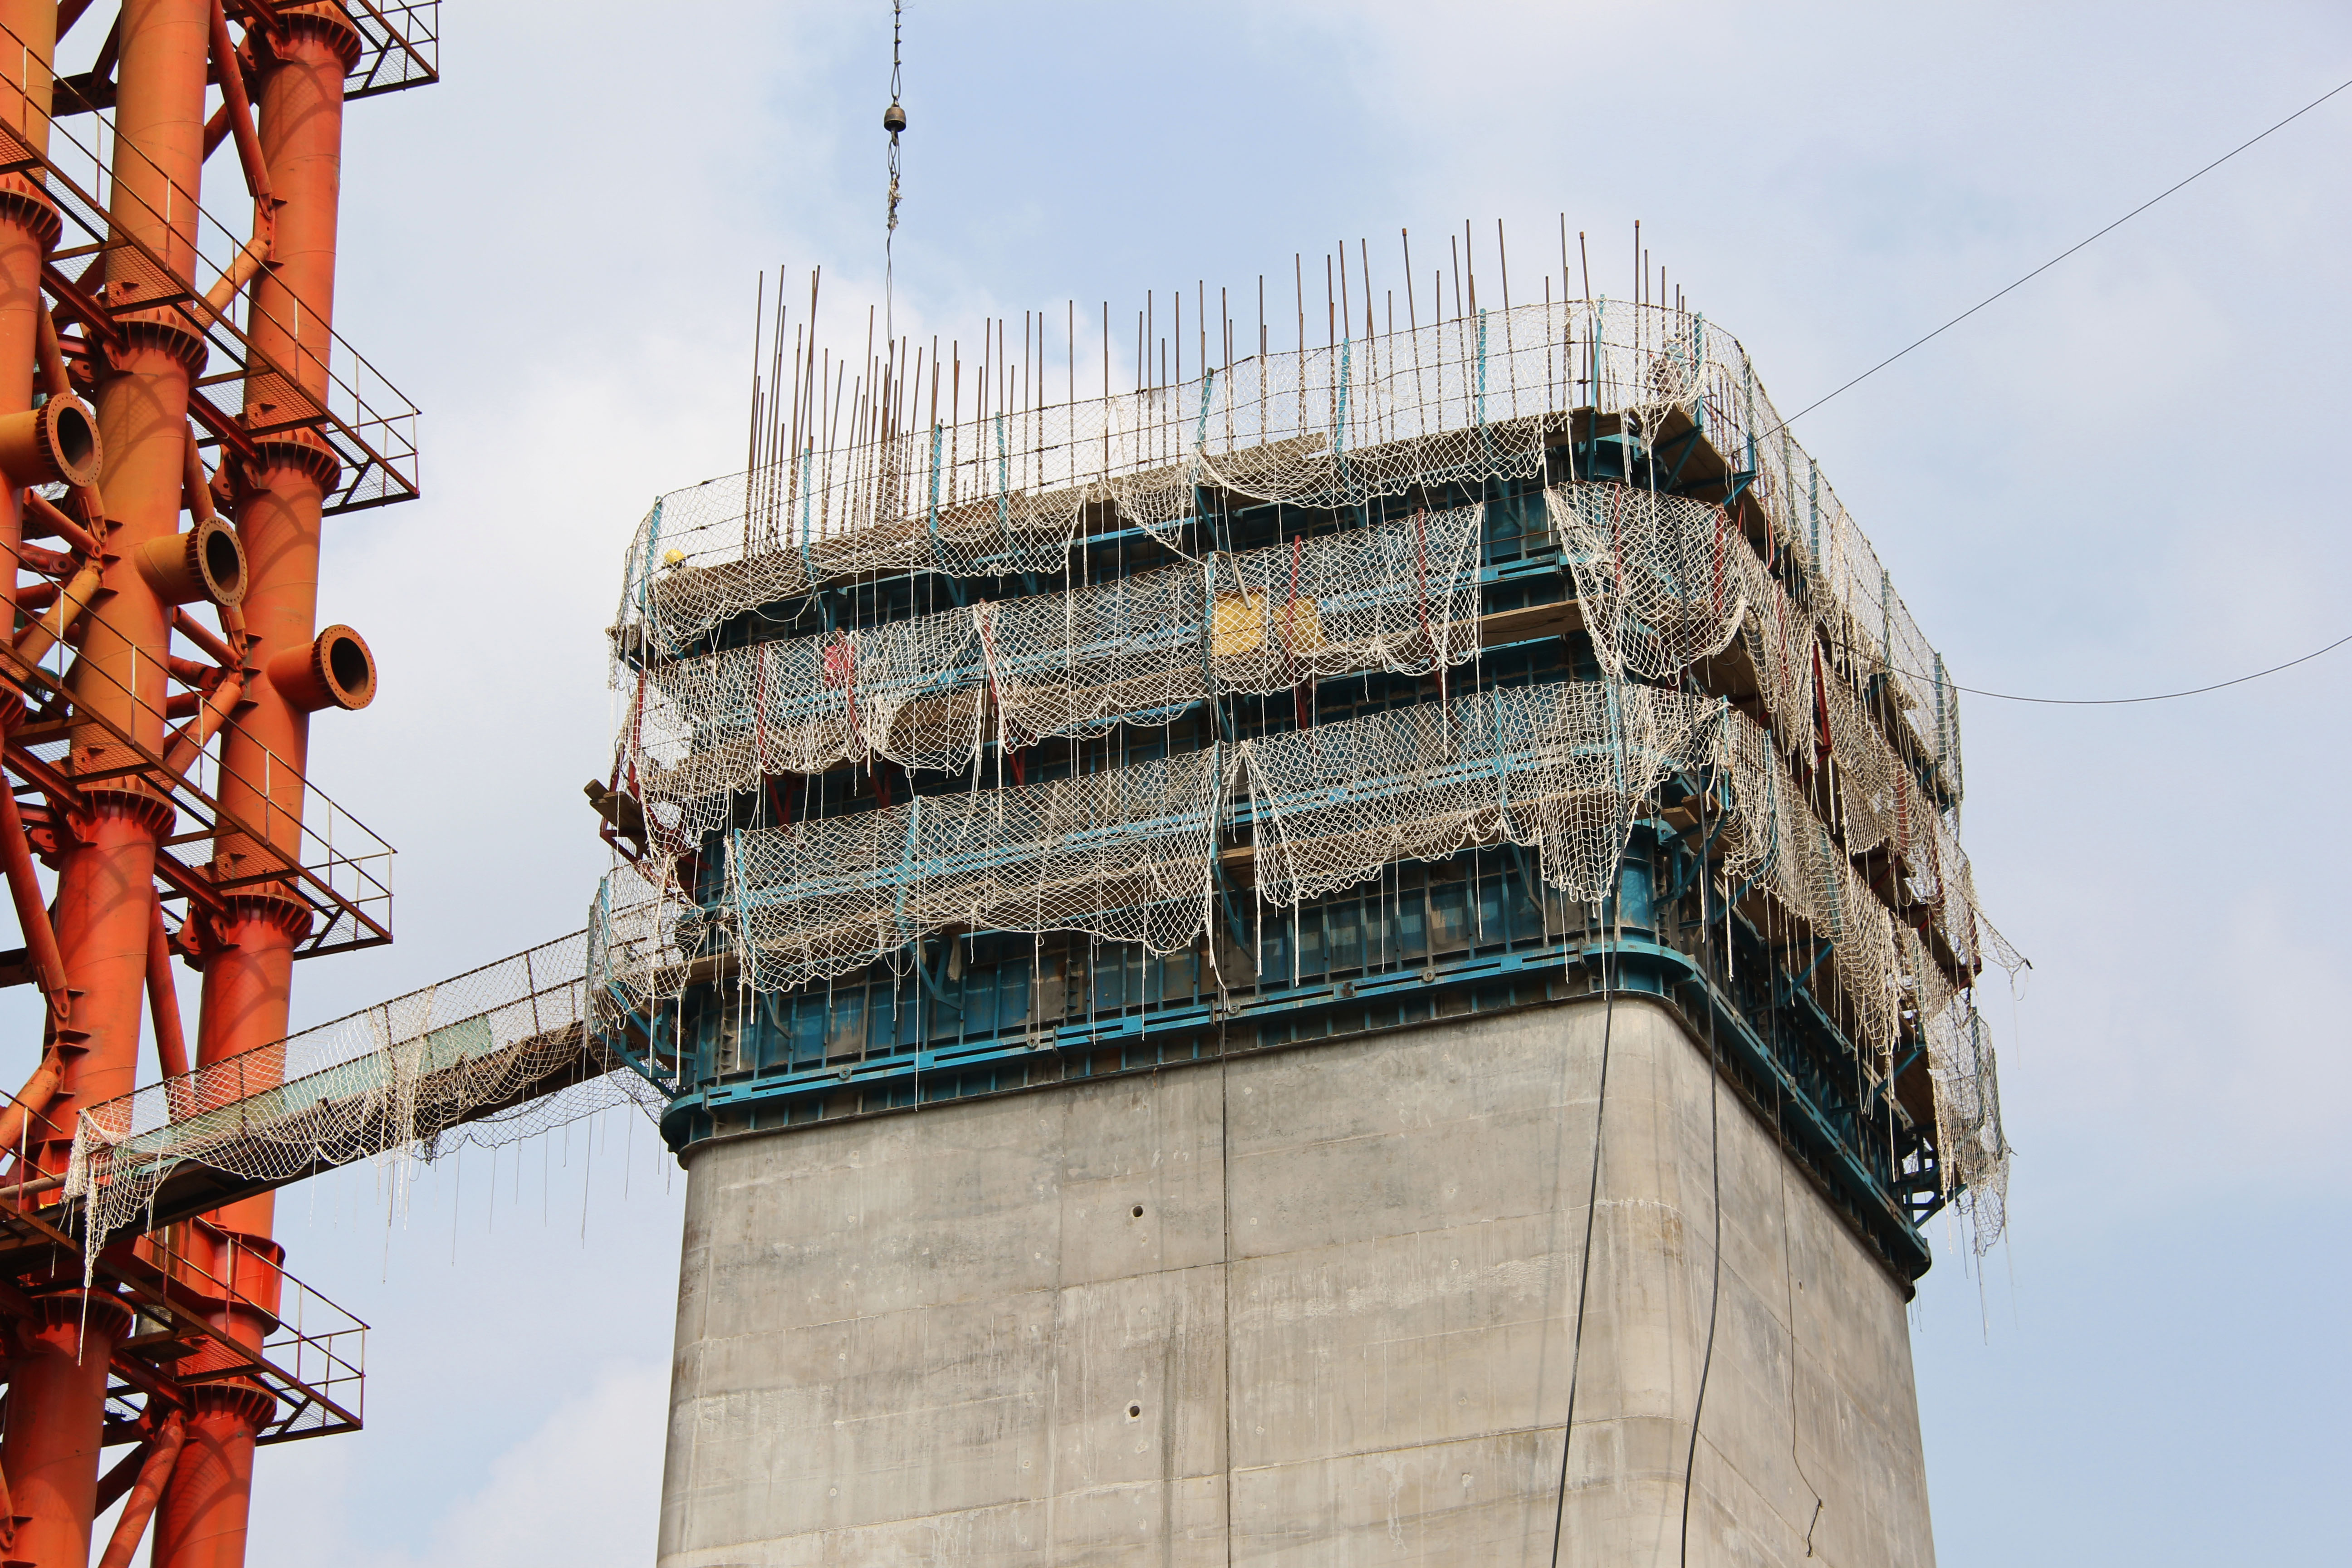 YachiRailwayPierScaffolding.jpg